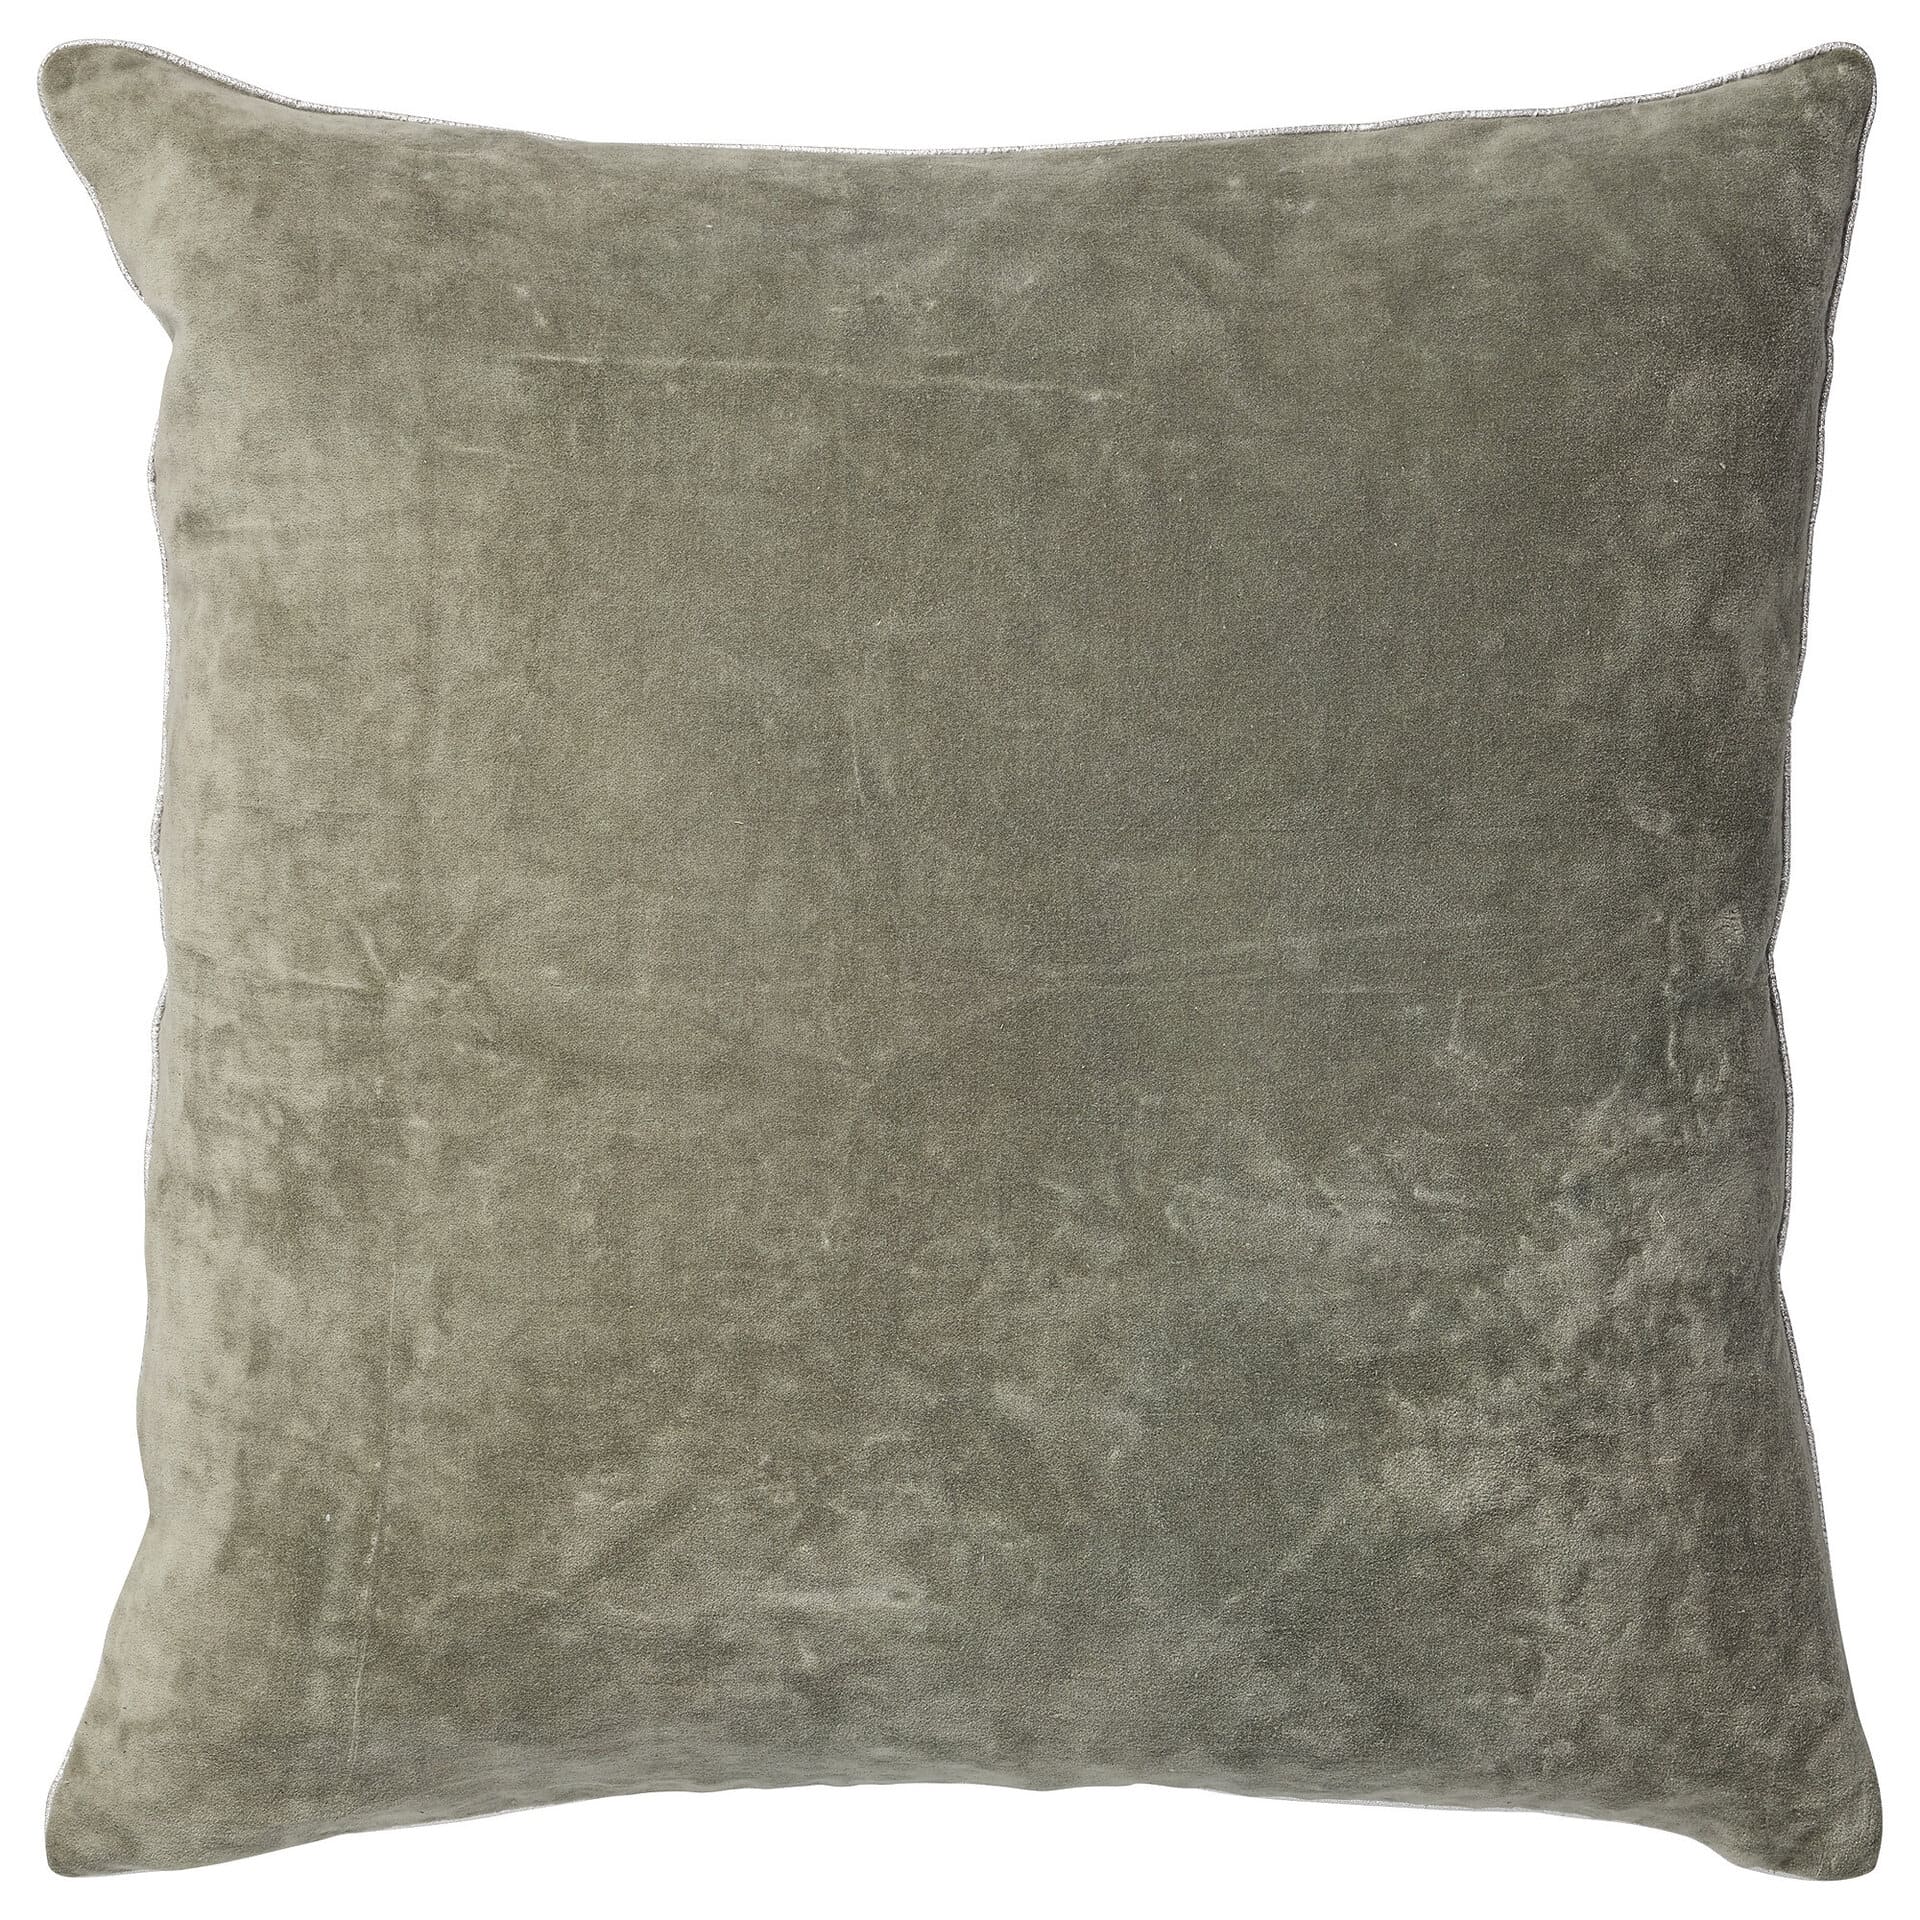 Ediana cushion 60x60 cm.